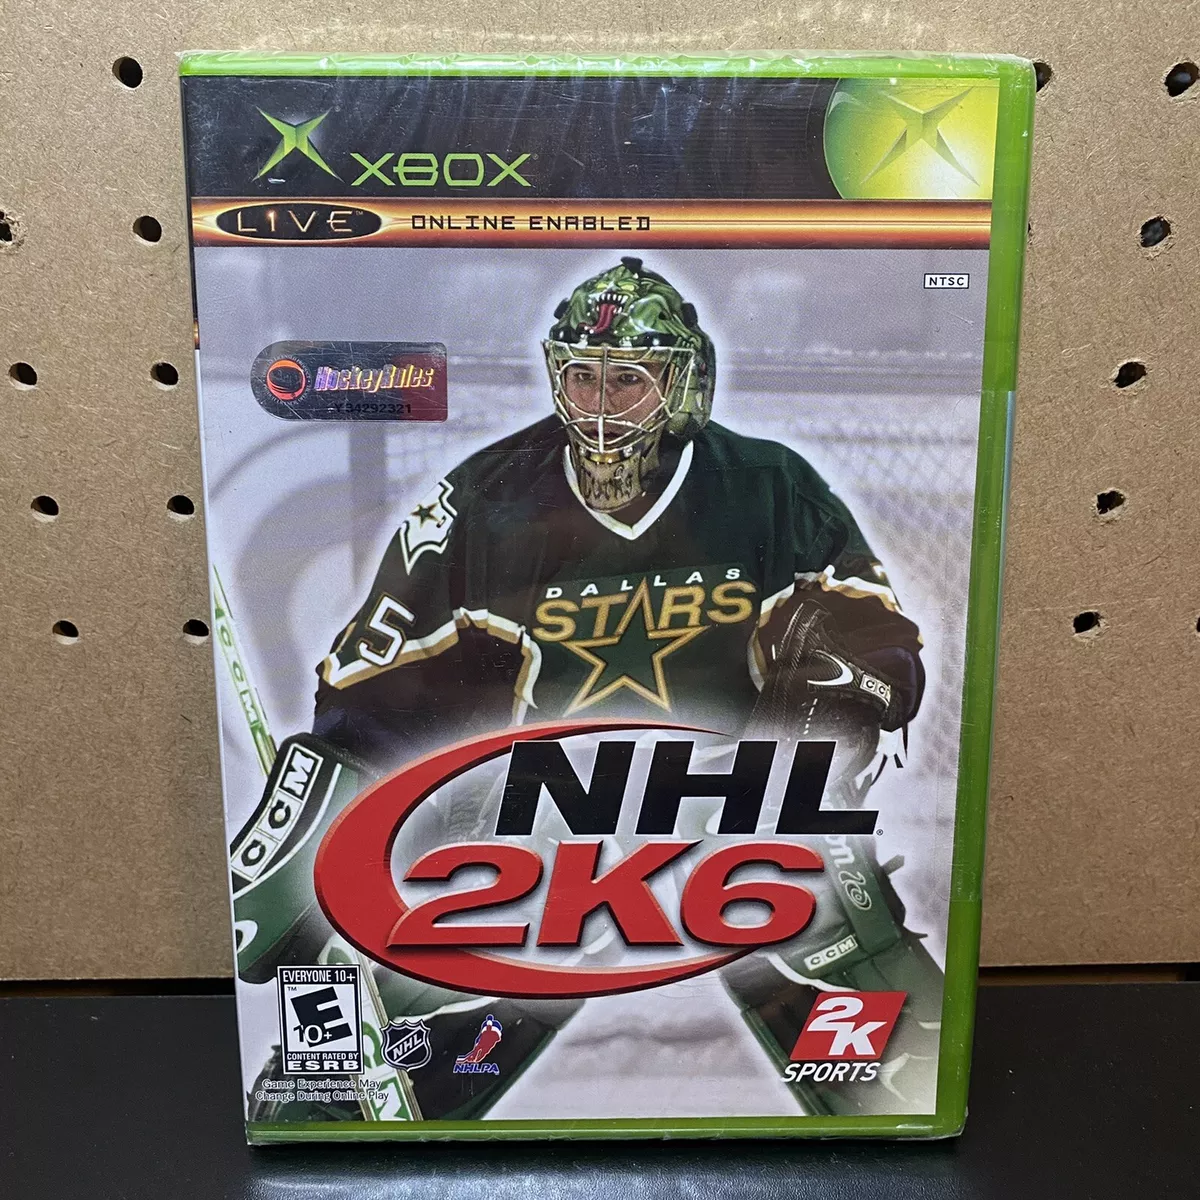 XBOX NHL 2K6 Factory Sealed Online Enabled Ice Hockey Video Game 710425298028 eBay